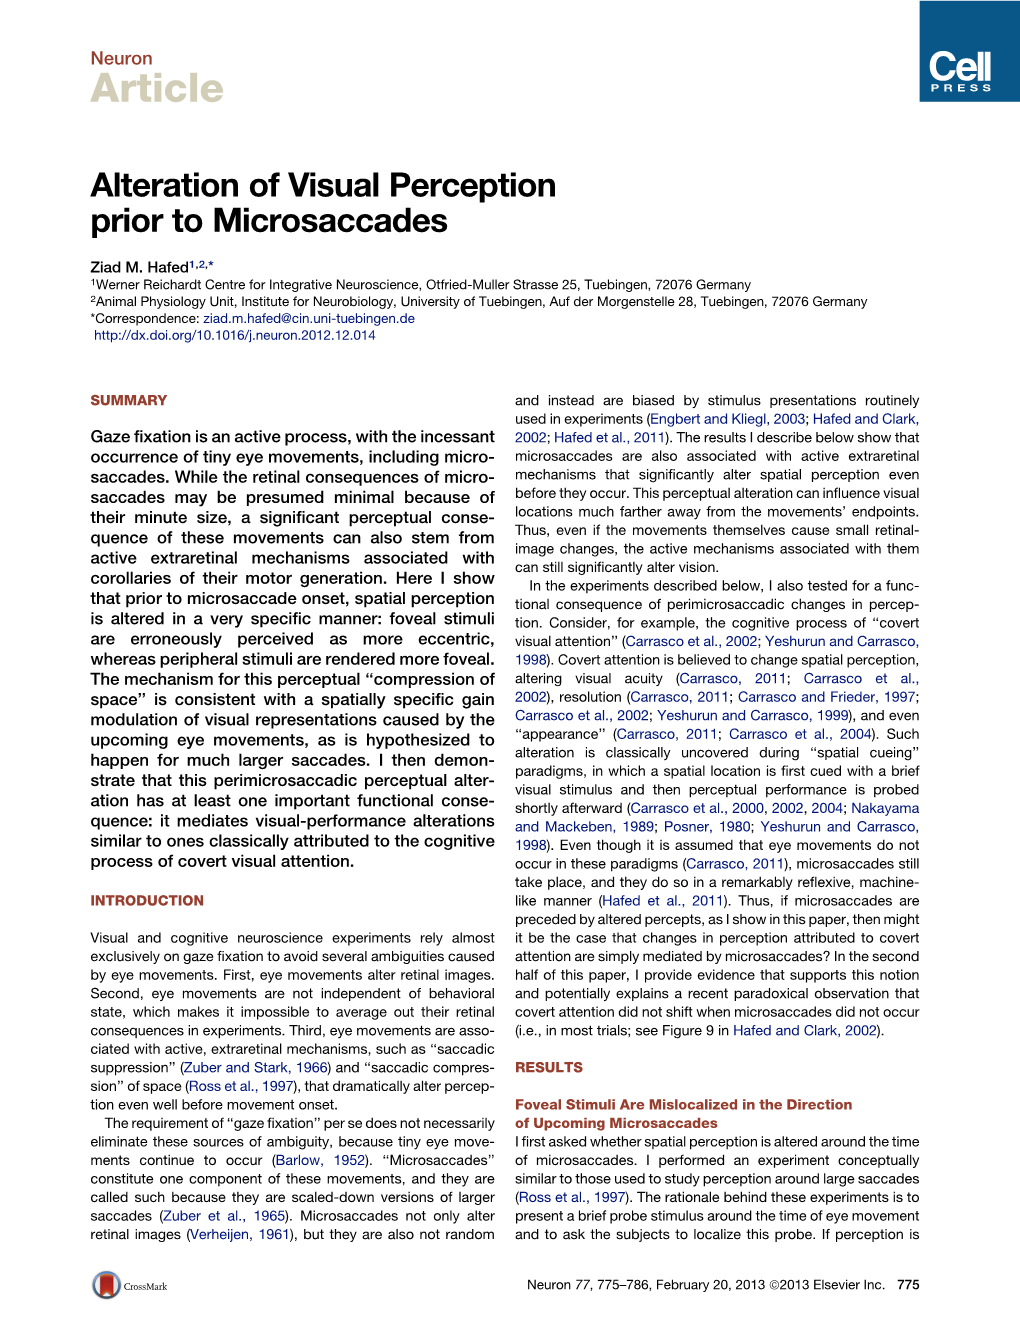 Alteration of Visual Perception Prior to Microsaccades